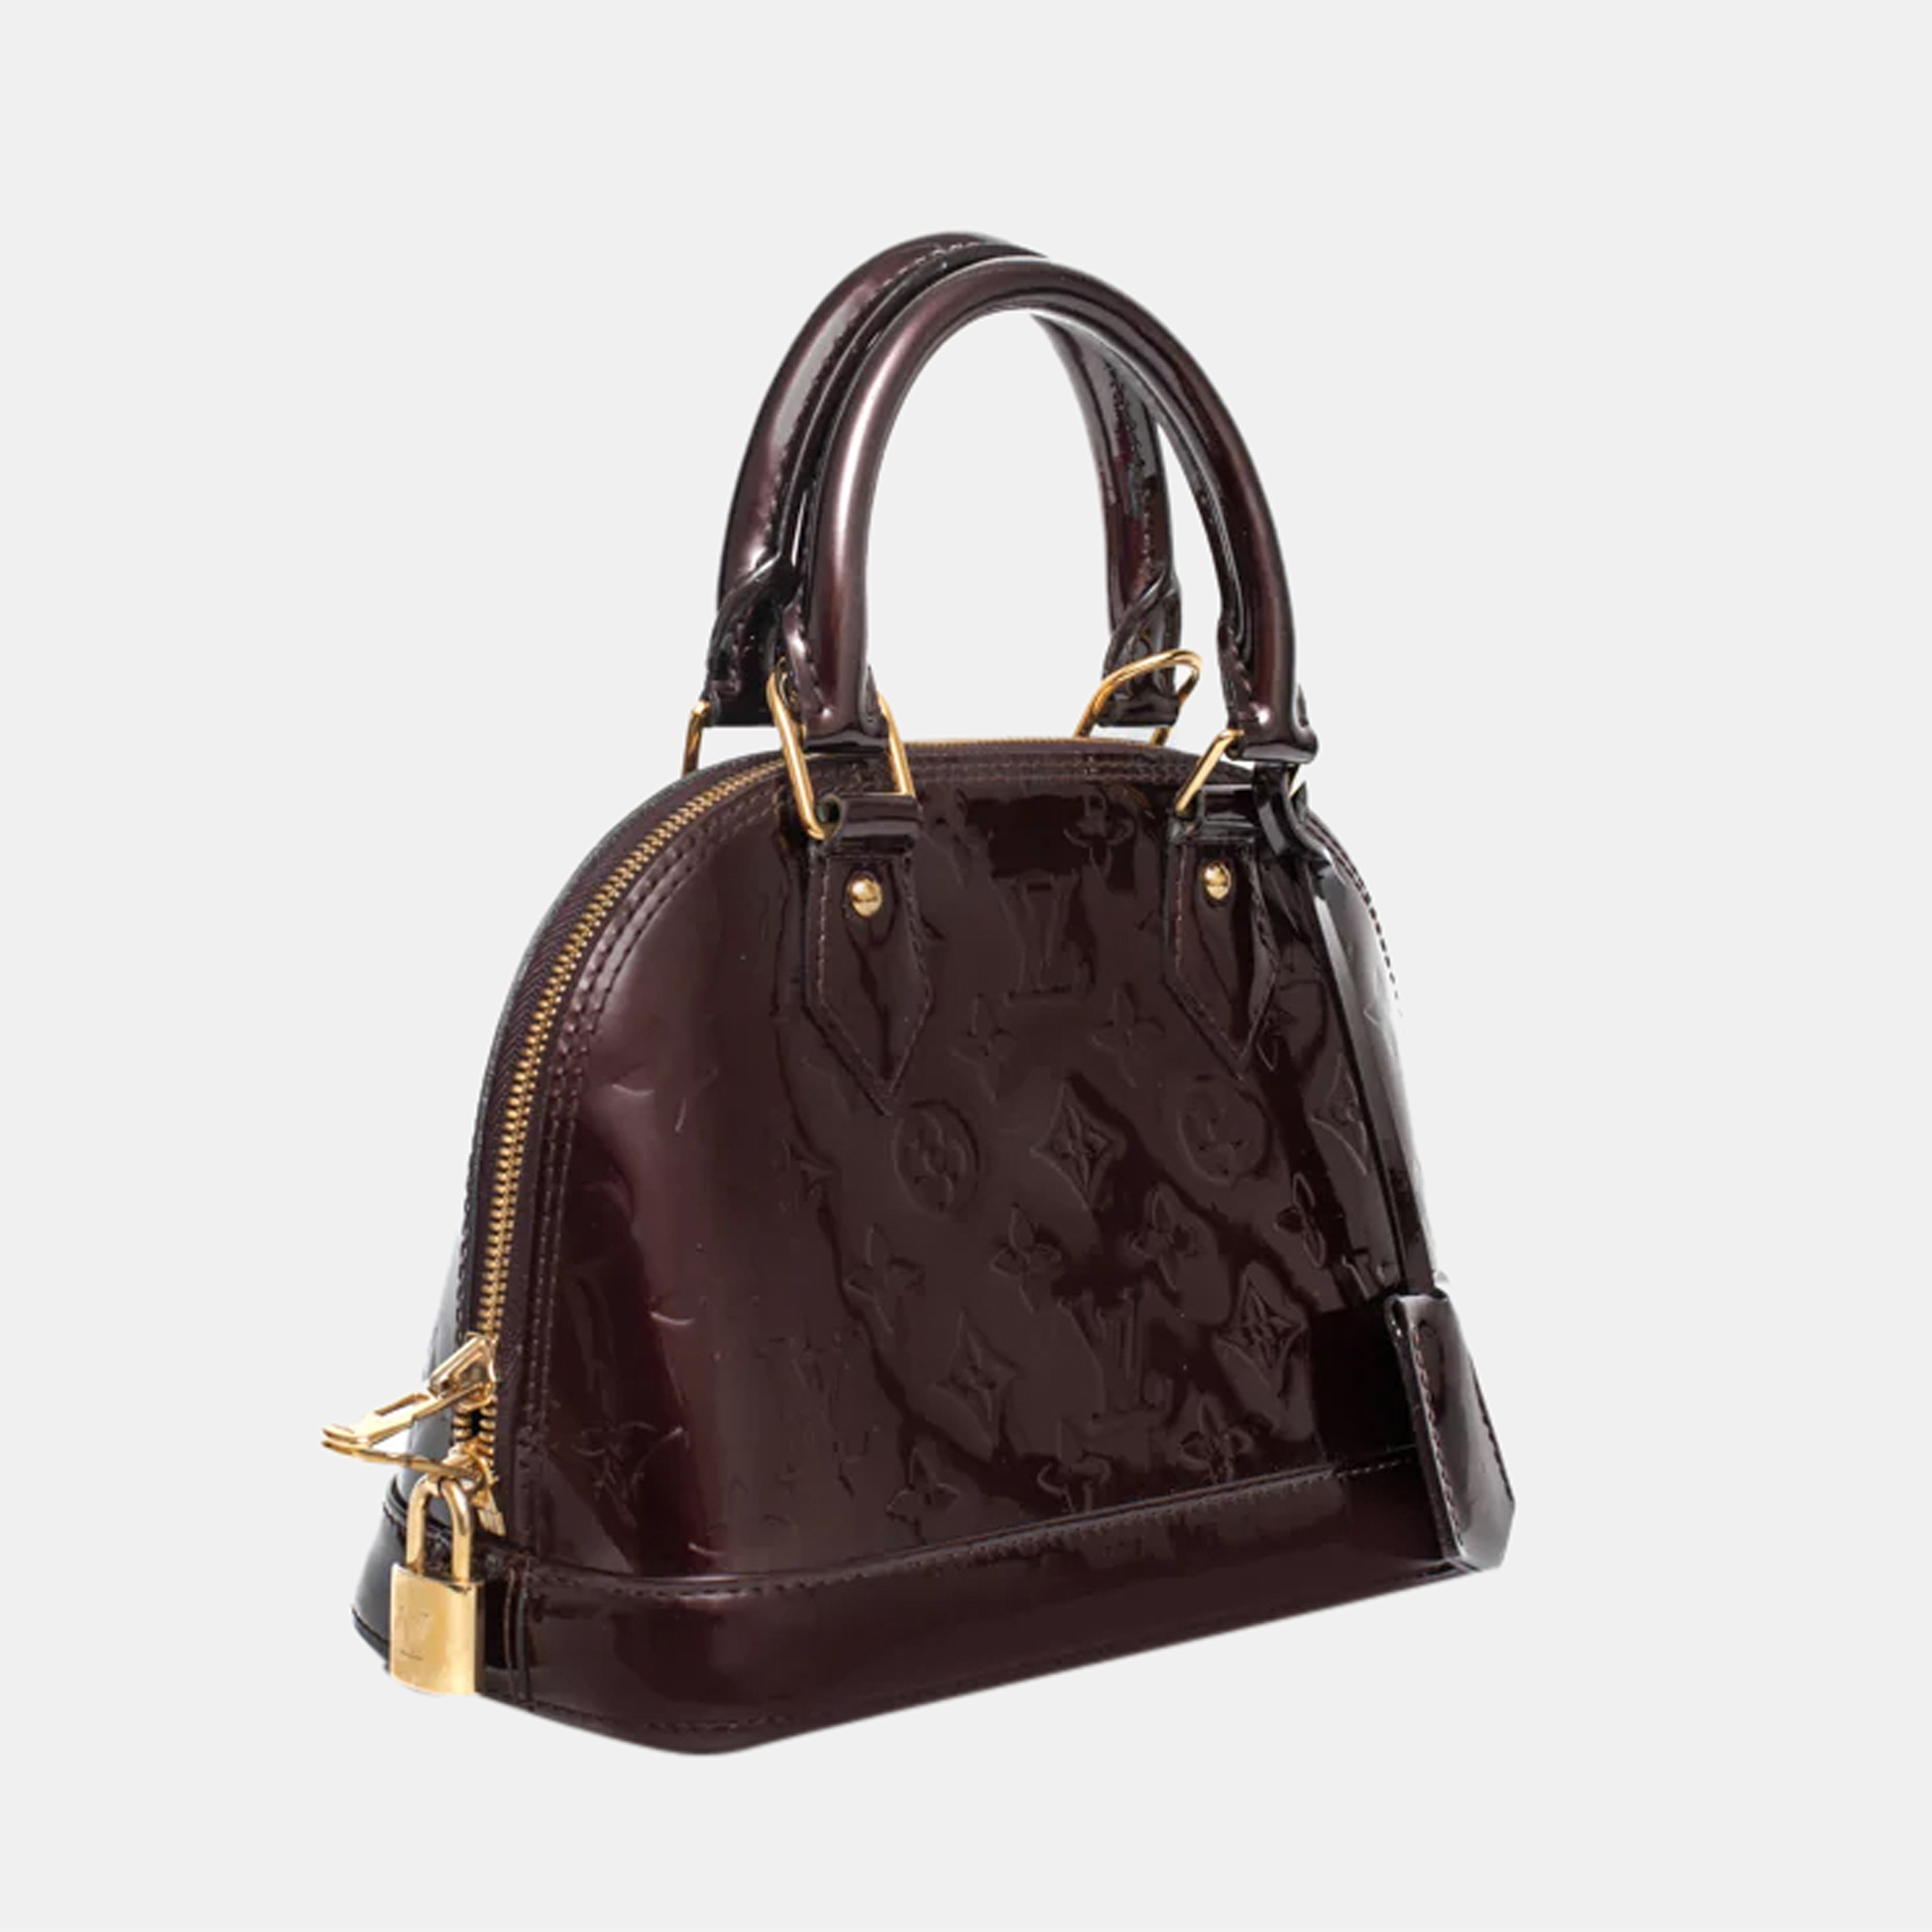 

Louis Vuitton Alma BB Handbag in Burgundy Patent leather